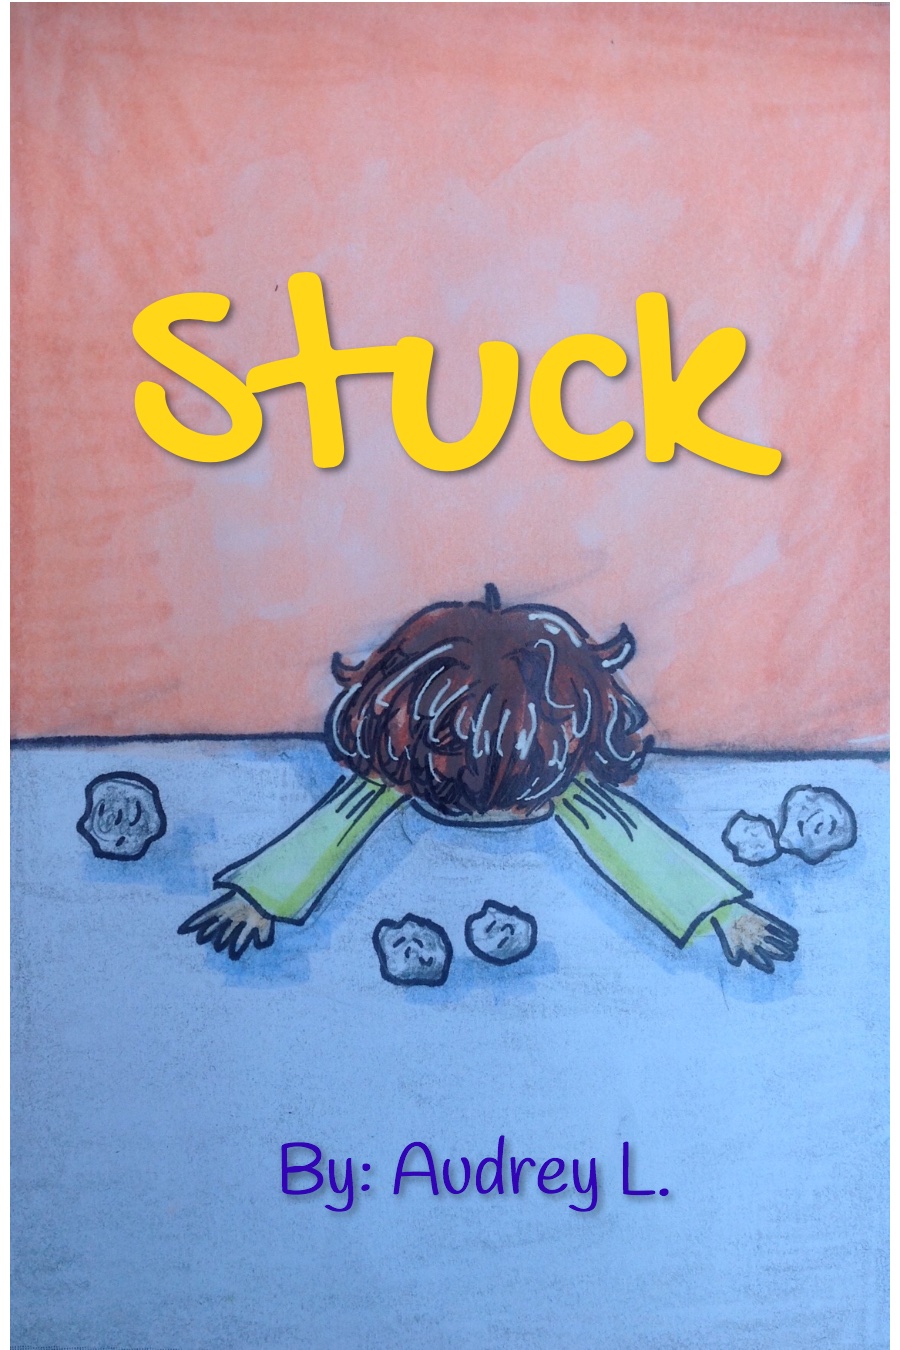 Stuck by Audrey L